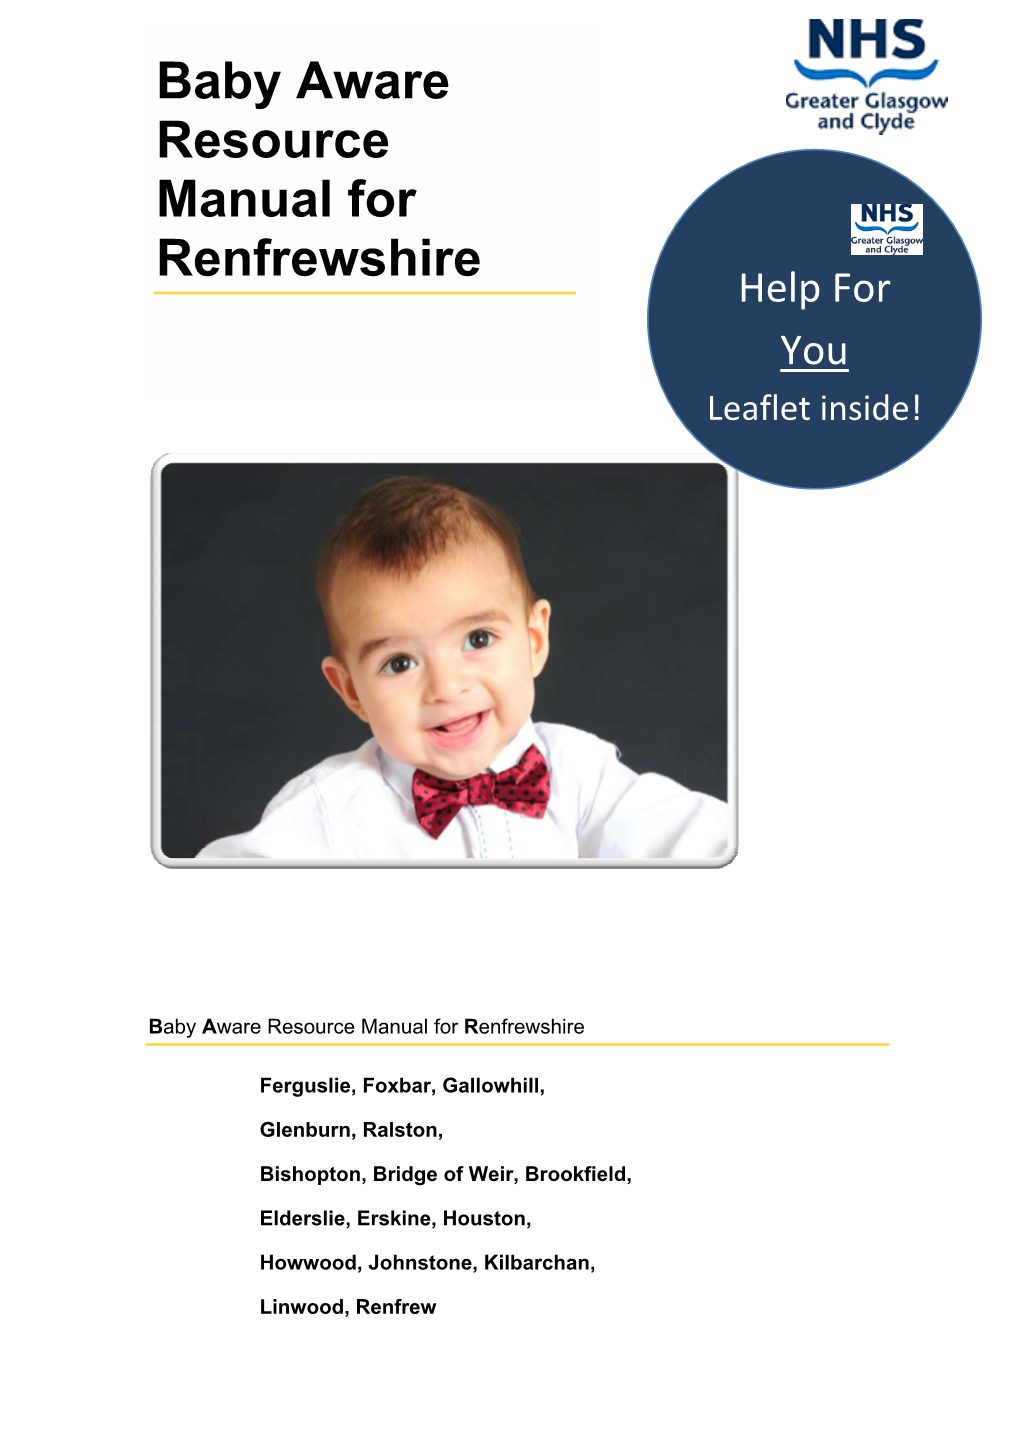 Baby Aware Resource Manual for Renfrewshire